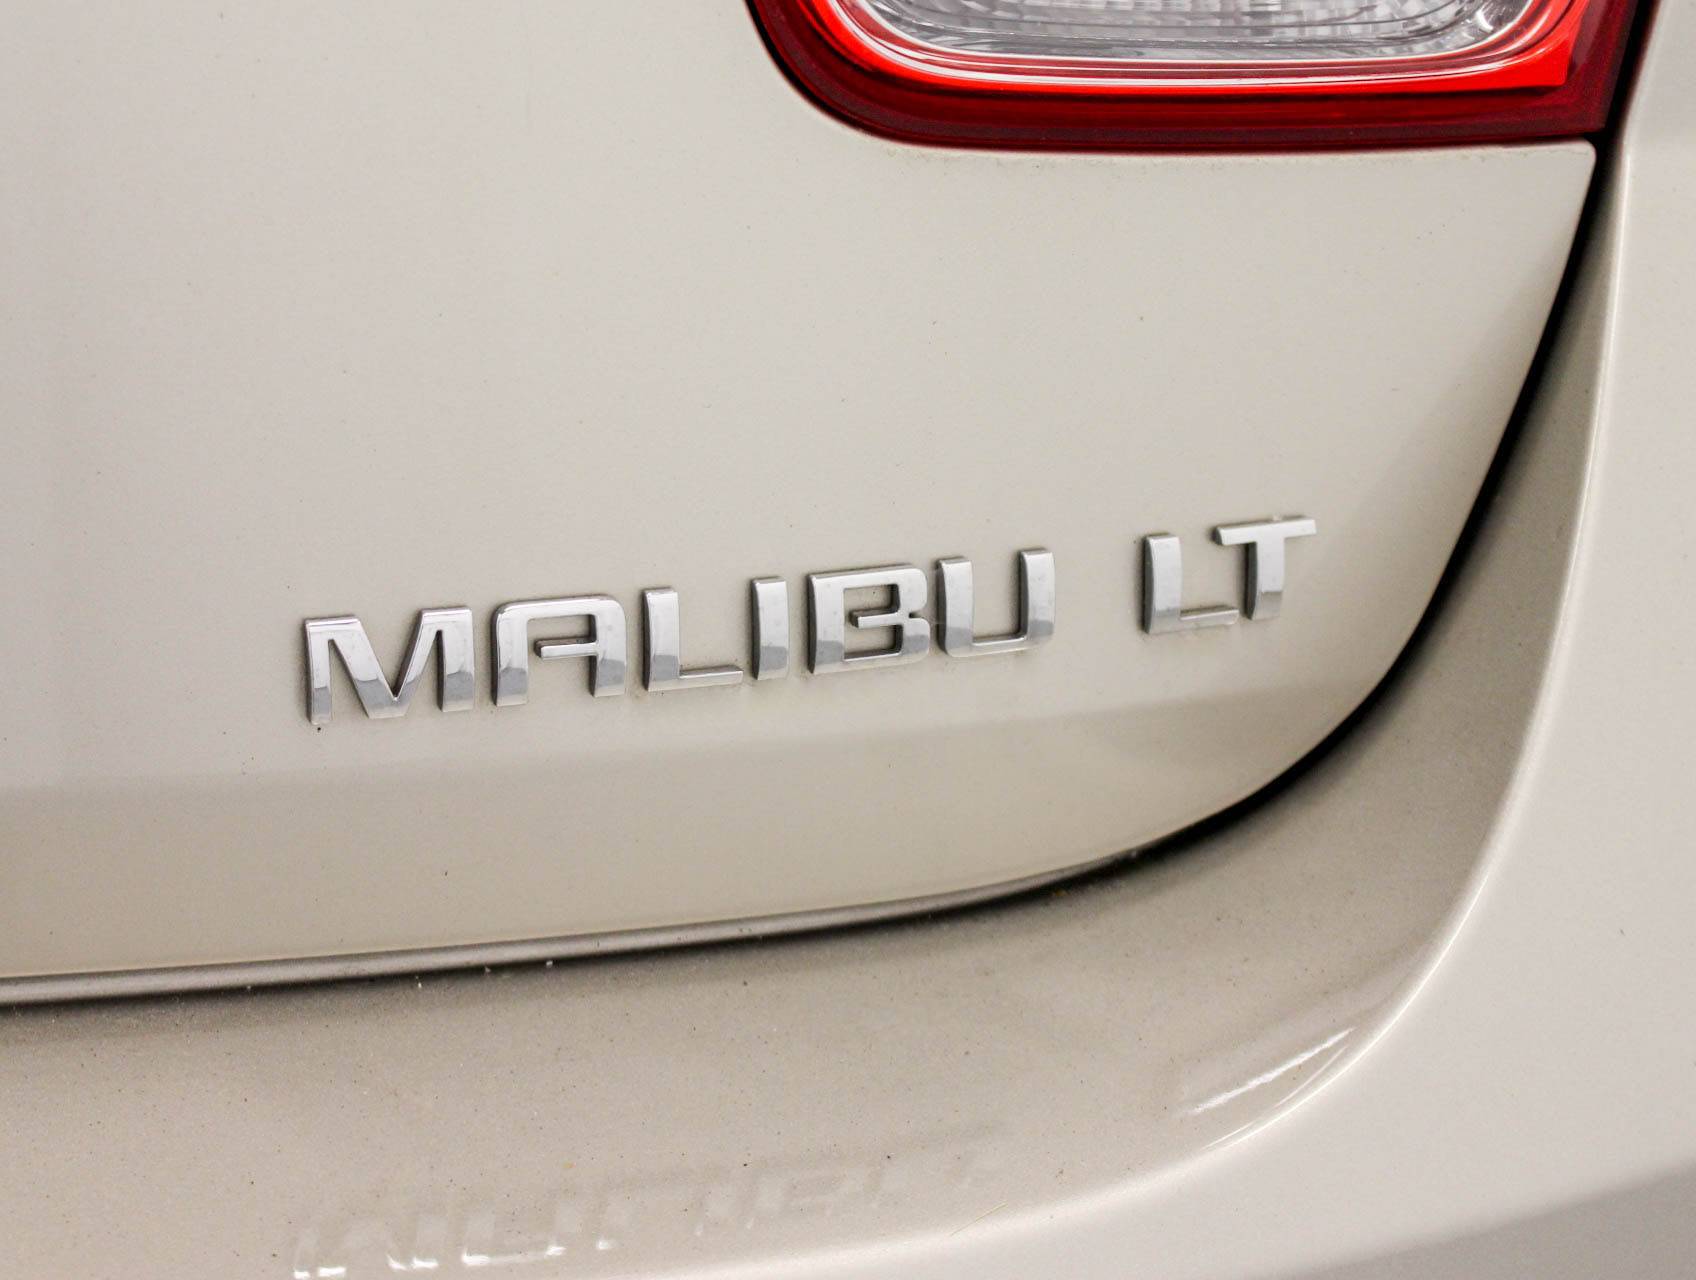 Florida Fine Cars - Used CHEVROLET MALIBU LIMITED 2016 MARGATE LT (1LT)